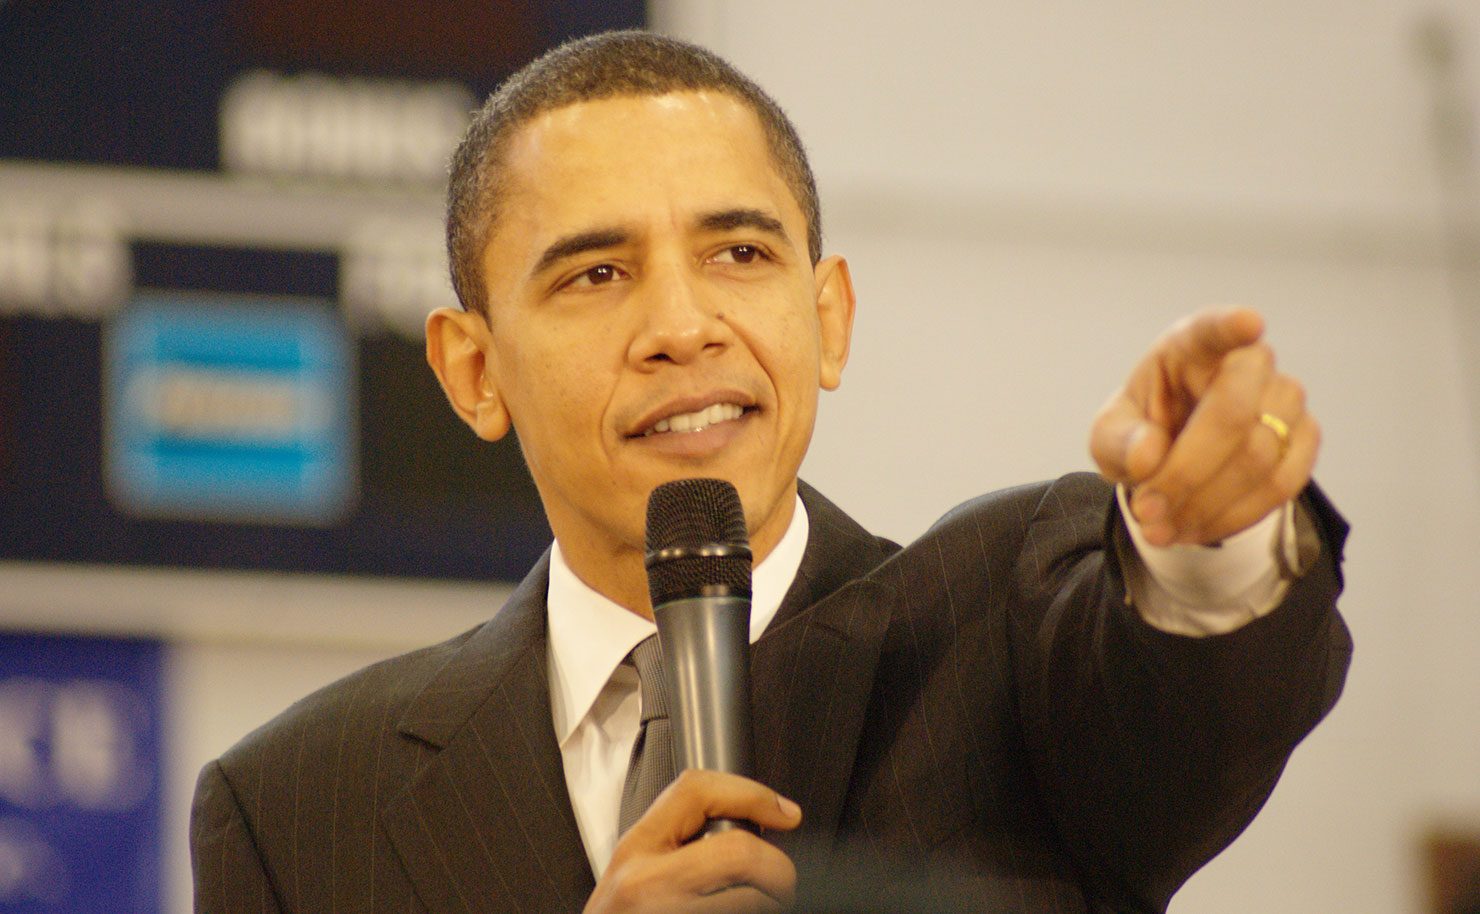 44th President of the United States of America, Barack Obama. (IMAGE: Marc Nozell, Flickr)